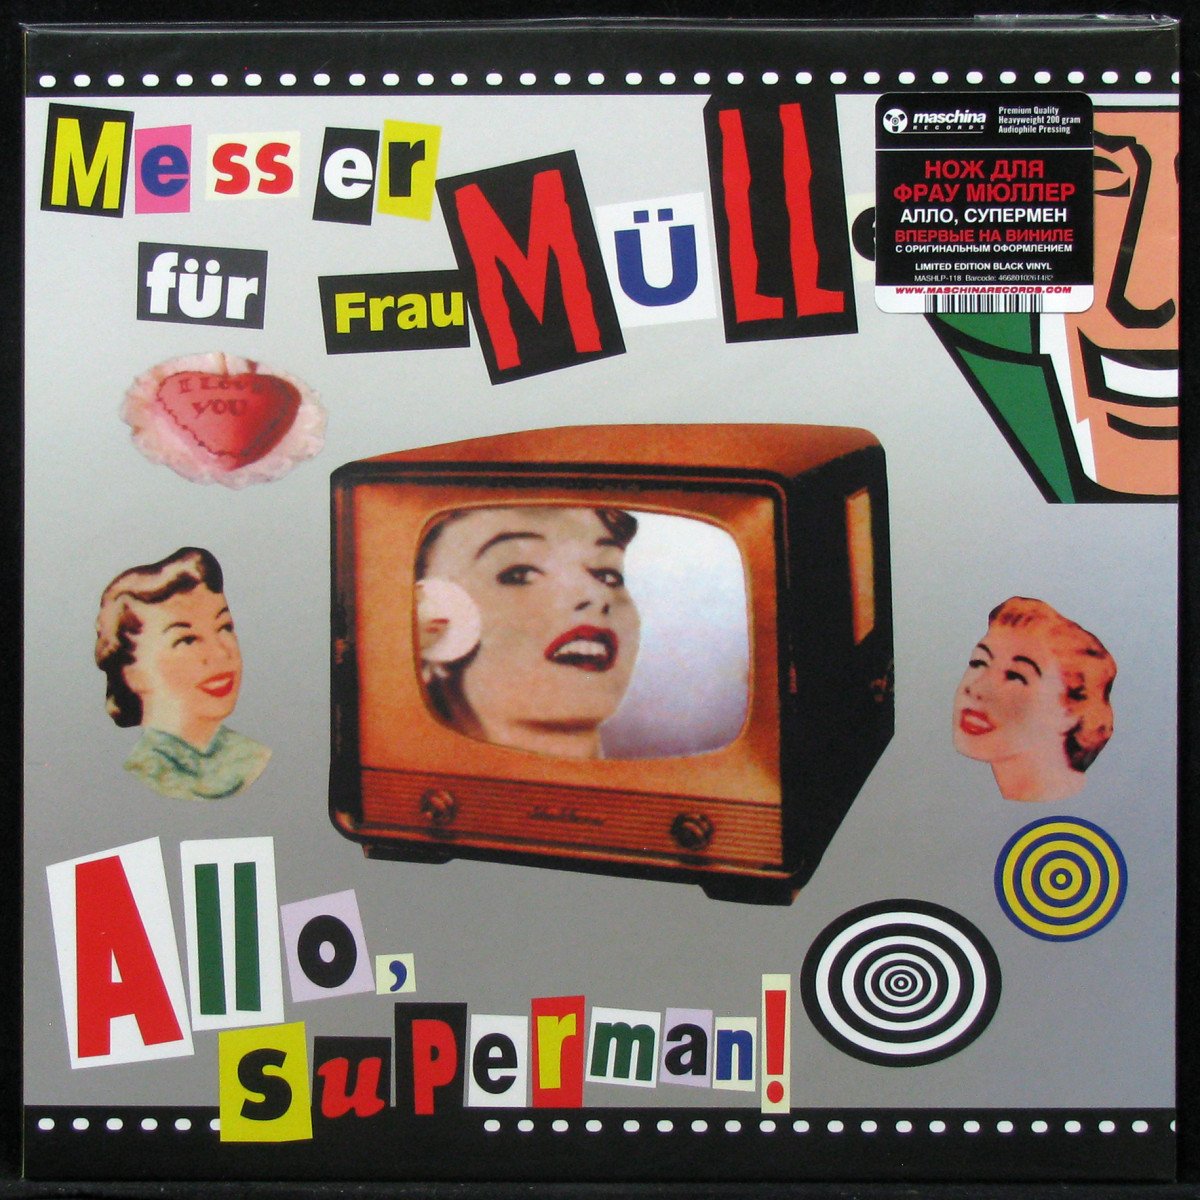 LP Messer Fur Frau Muller — Allo, Superman! фото